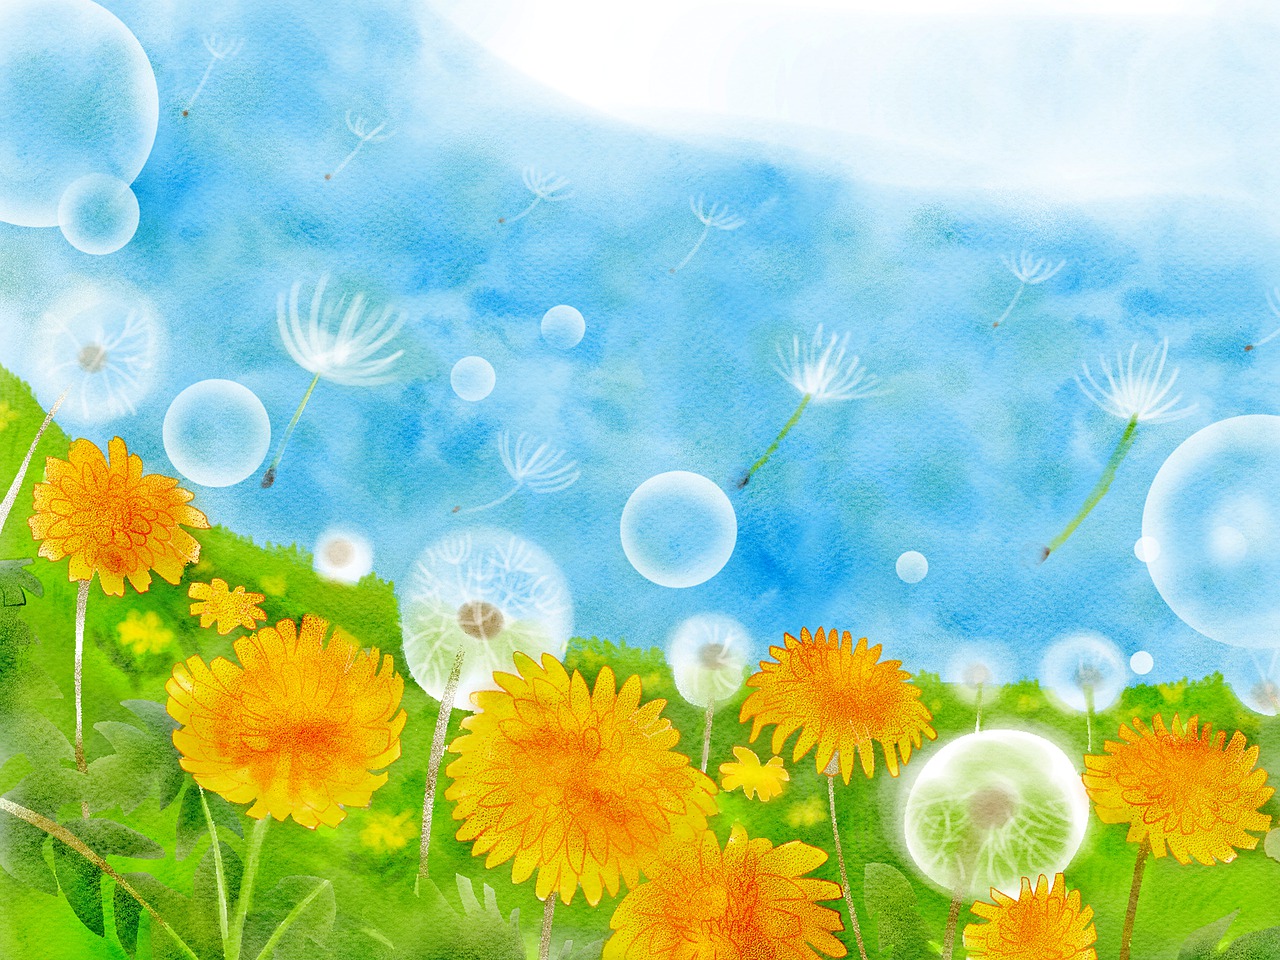 Watercolor Painting Dandelions  - 7089643 / Pixabay